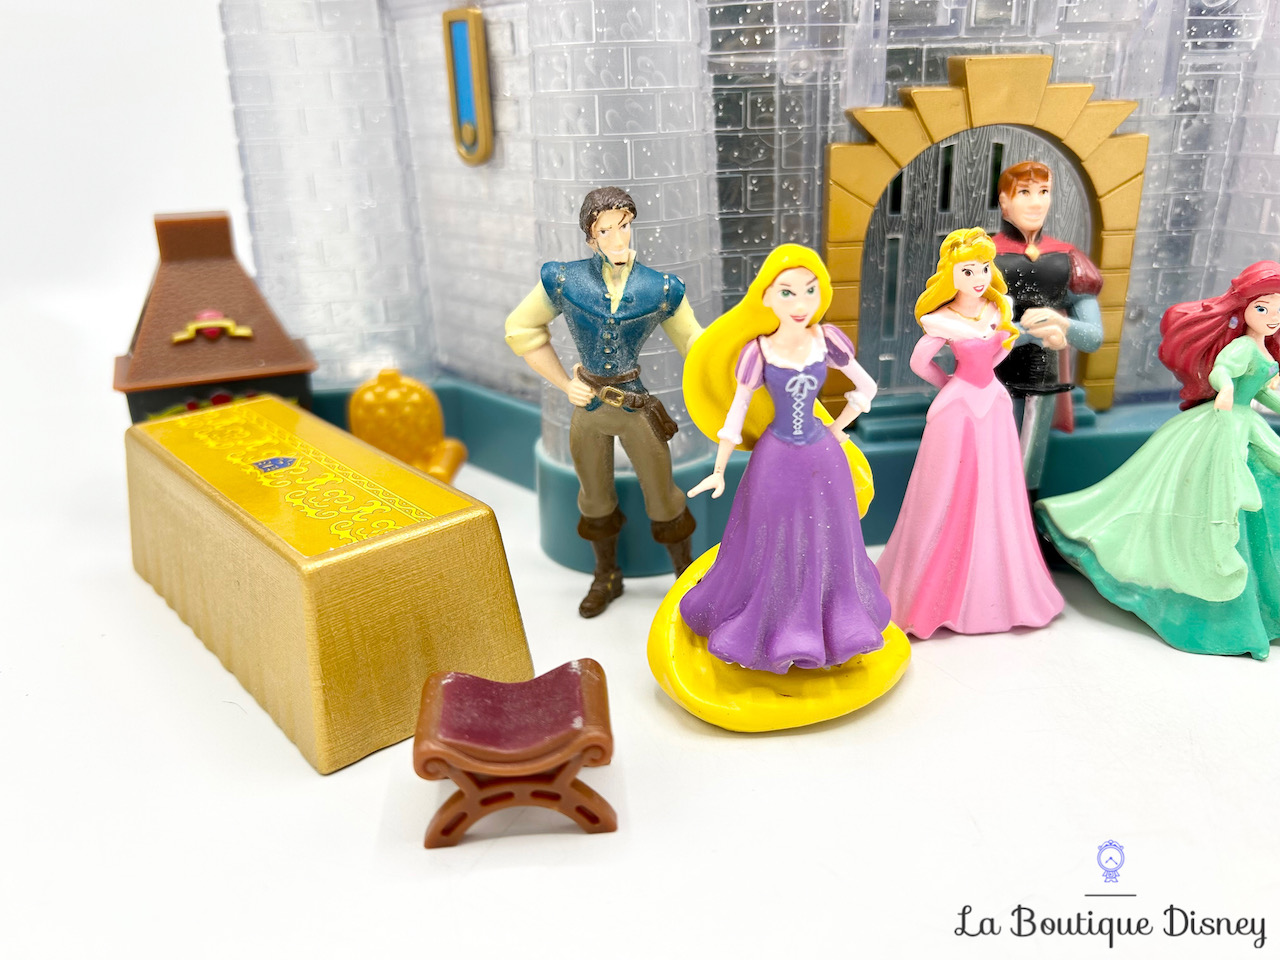 jouet-chateau-princesses-disneyland-paris-2021-disney-lumineux-sonore-figurines-2